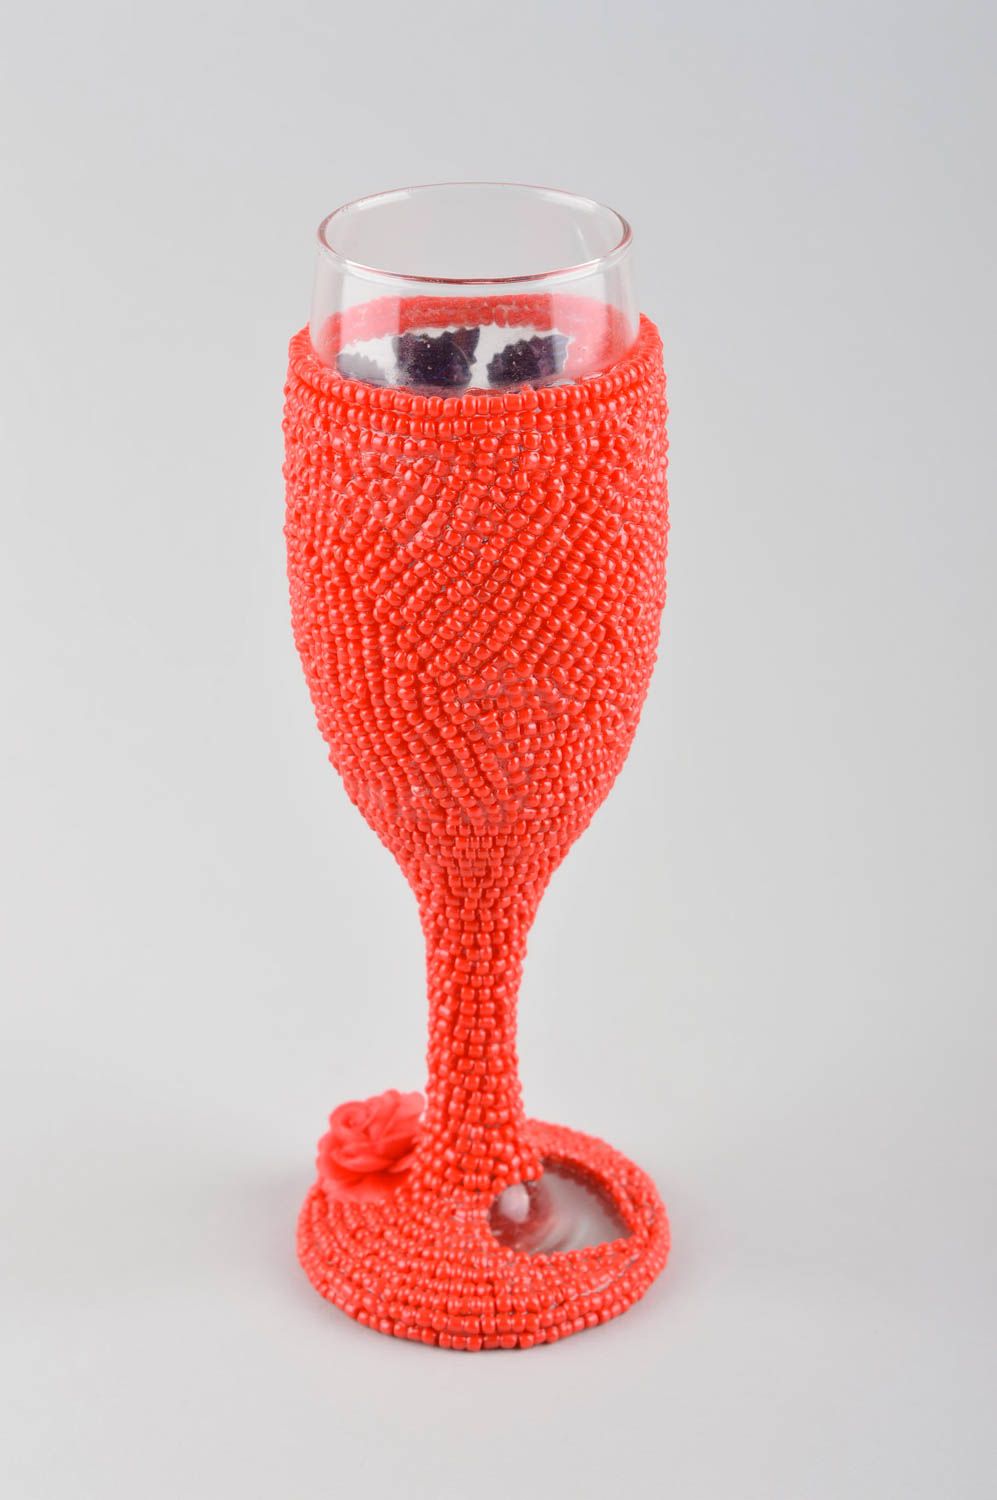 Unusual handmade glass champagne glass design glass decorative glass home decor photo 3